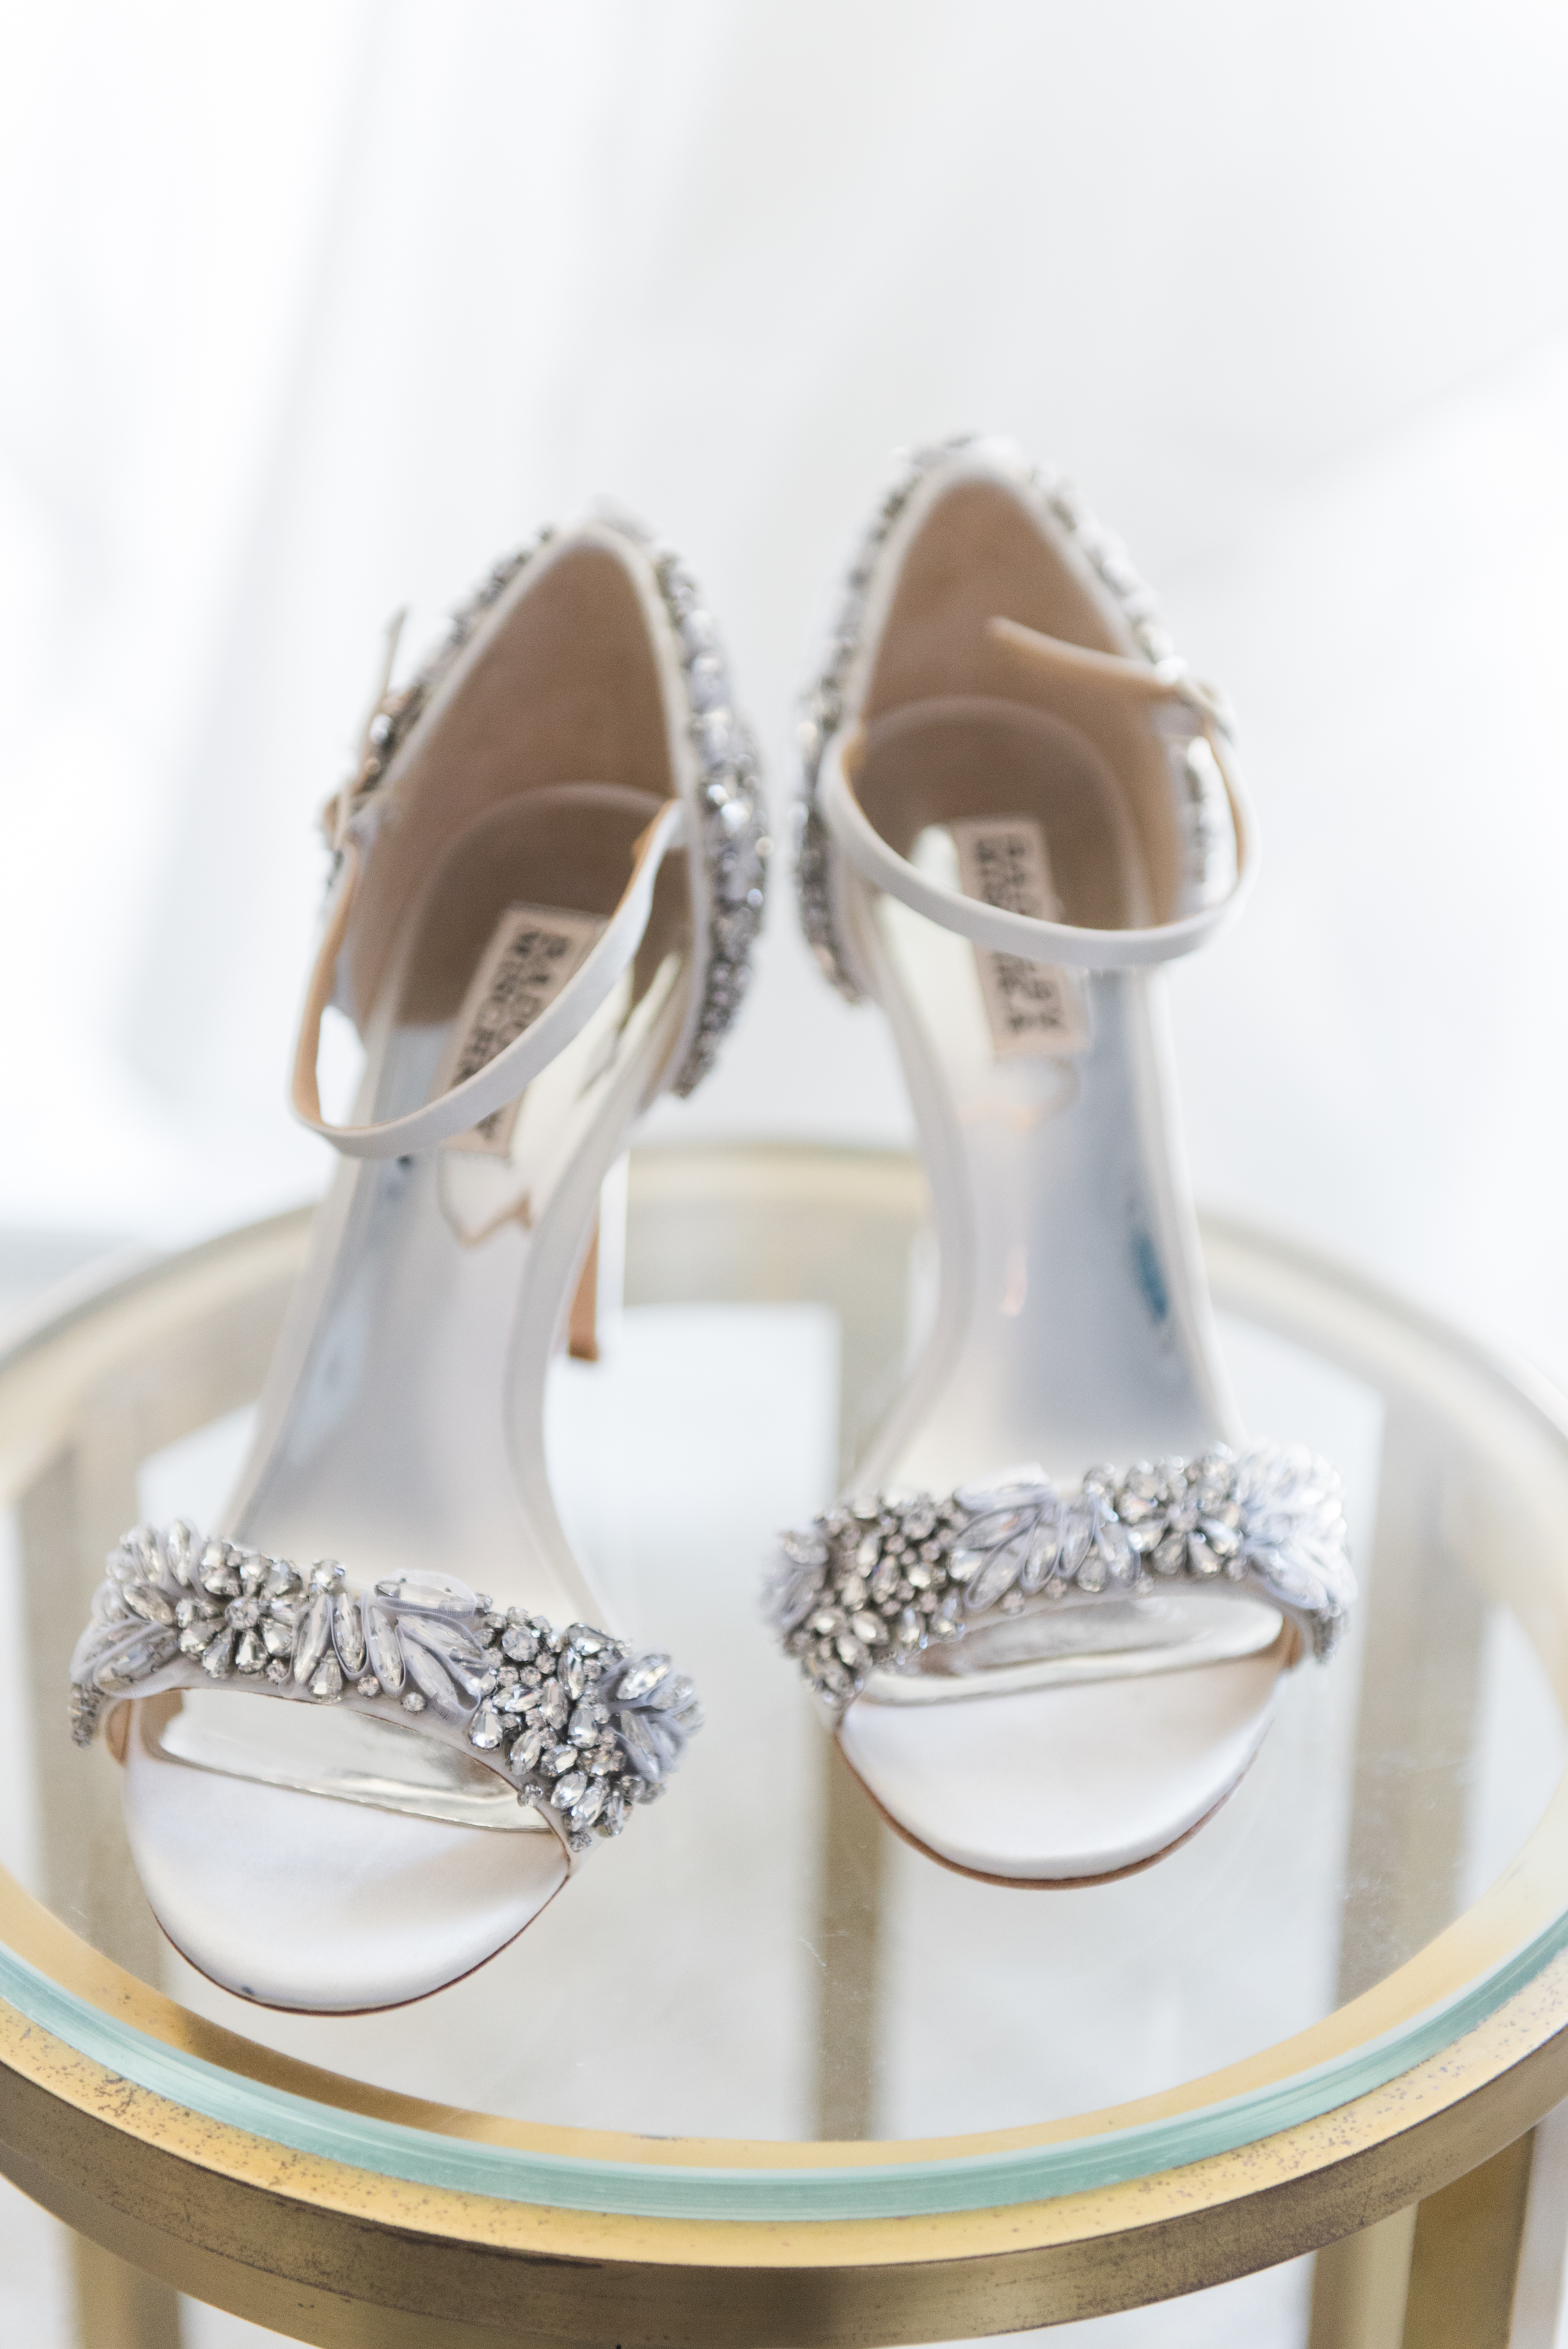 Gorgeous Silver Wedding Shoes - Flagler Museum Palm Beach Wedding Venue - The Overwhelmed Bride Wedding Blog